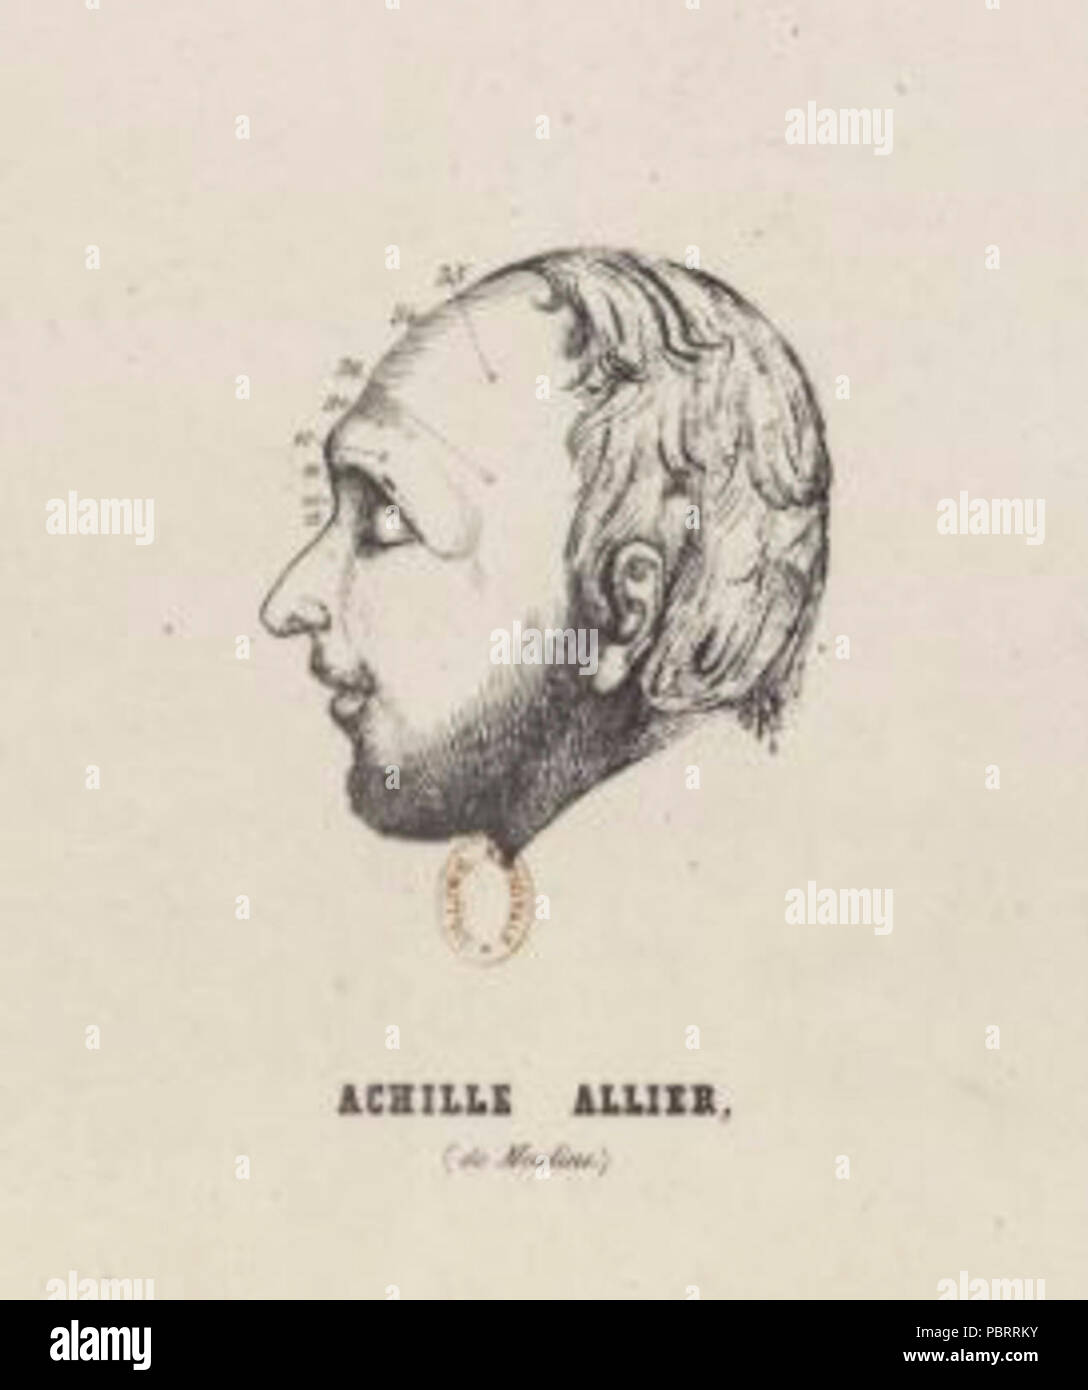 Achille Allier. Foto Stock